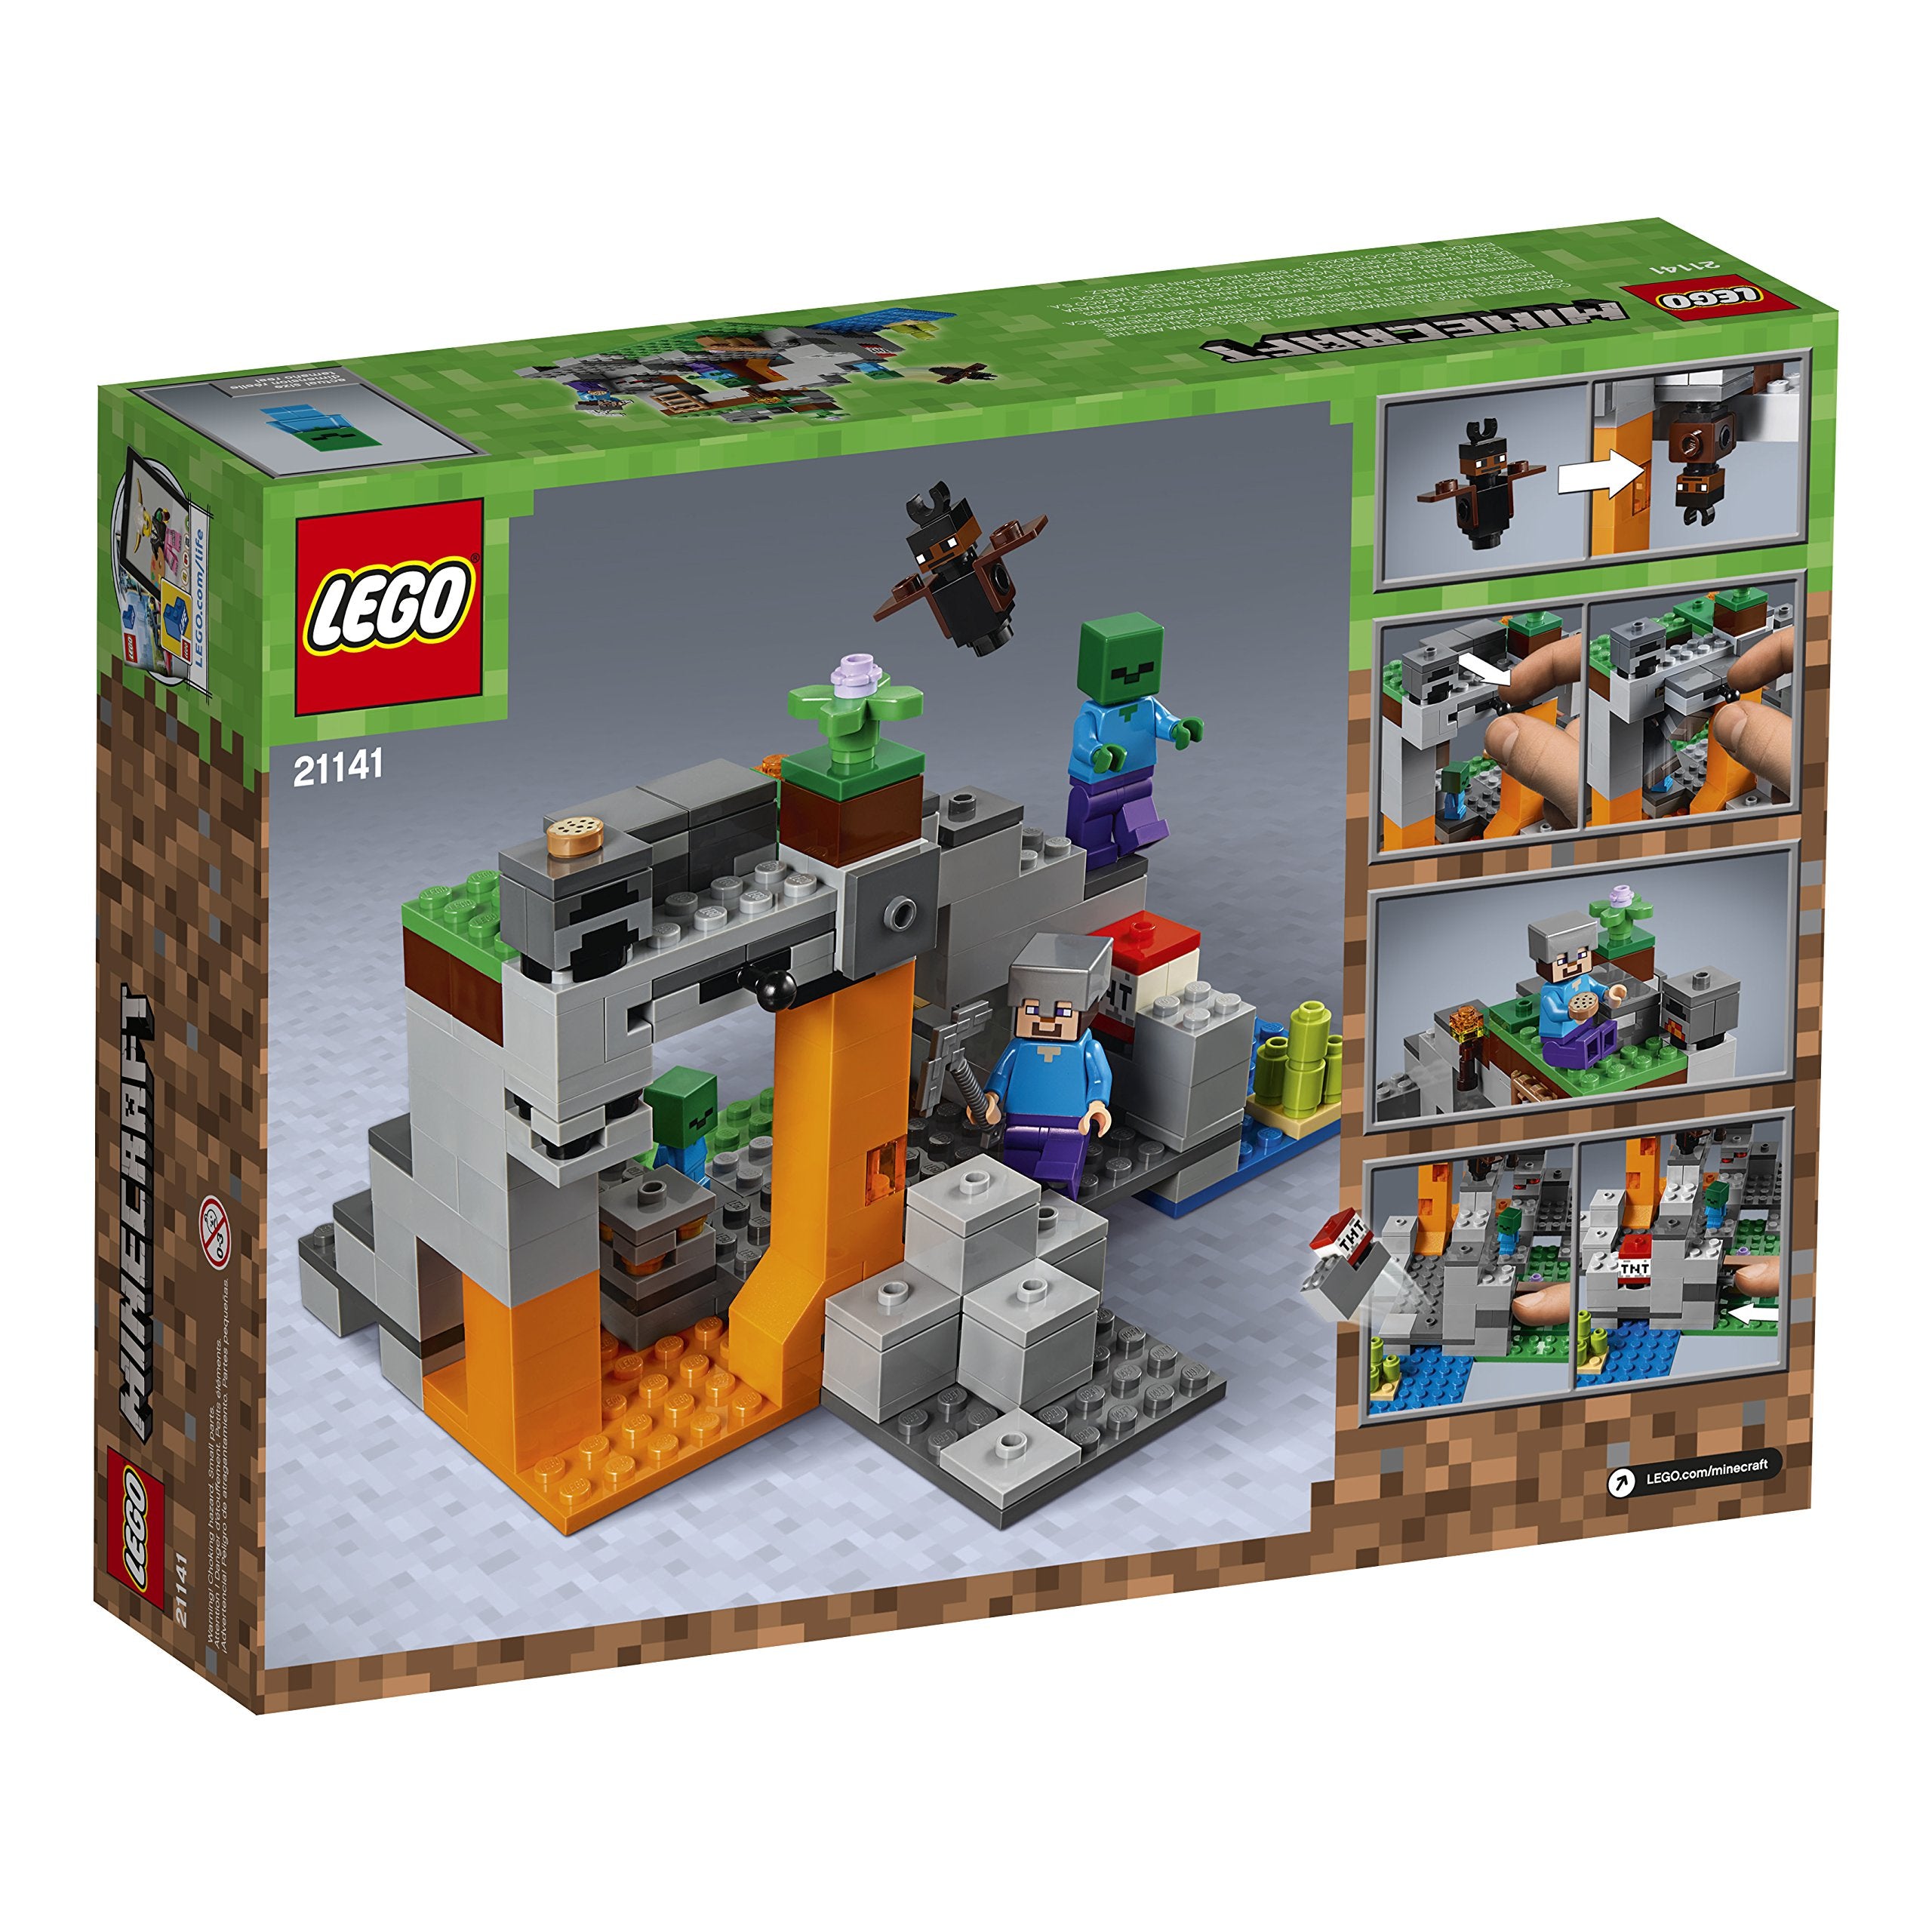 LEGO Minecraft The Zombie Cave 21141 Building Kit (241 Piece)